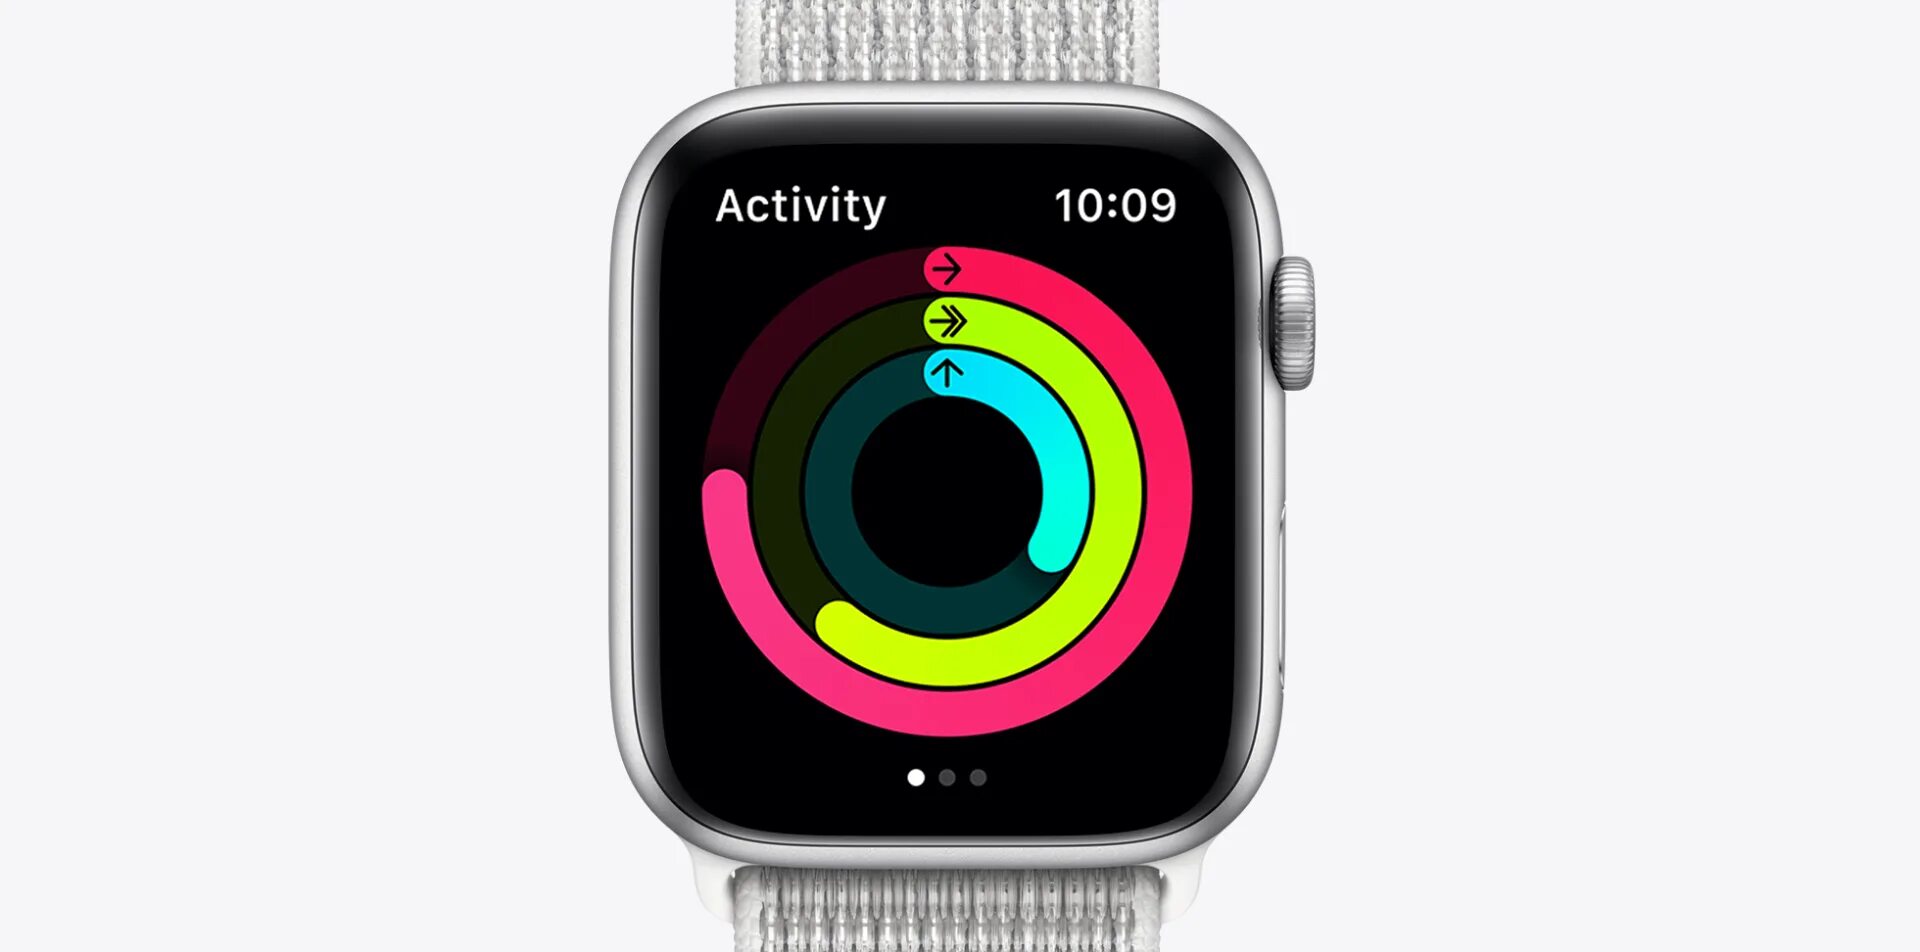 Кольца apple watch. Кольца Эппл вотч. Часы Эппл вотч кольца. Кольца активности эпл вотч. Эпл вотч круги активности.